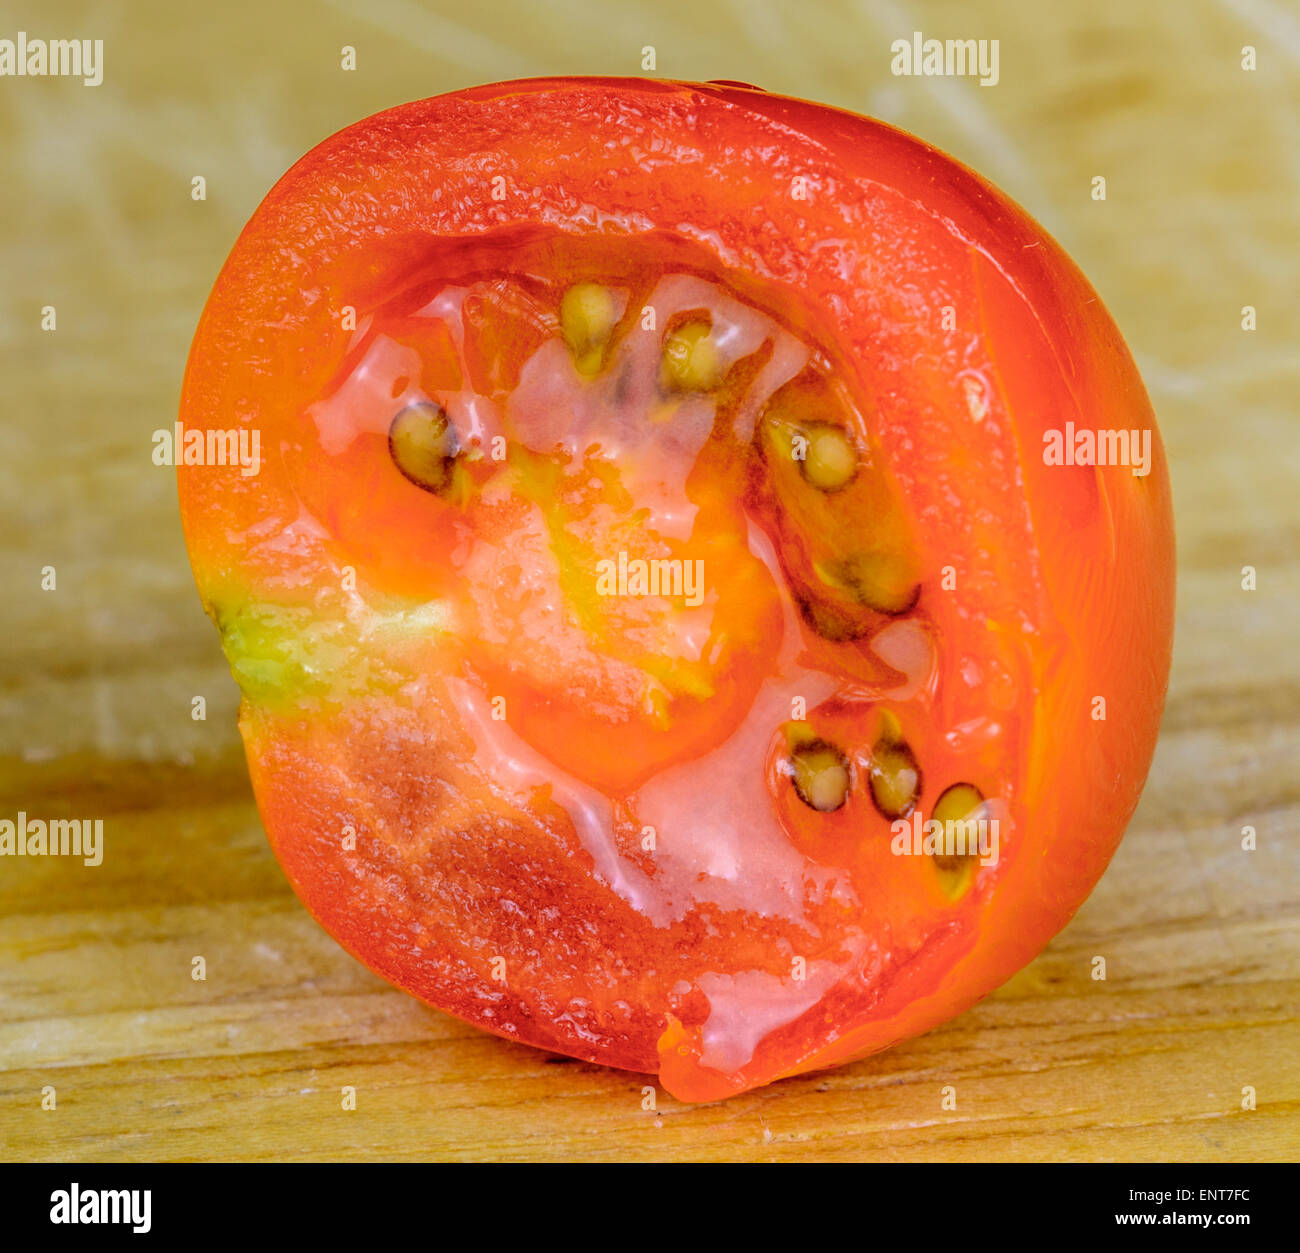 Red cherry tomato cut in half. Stock Photo